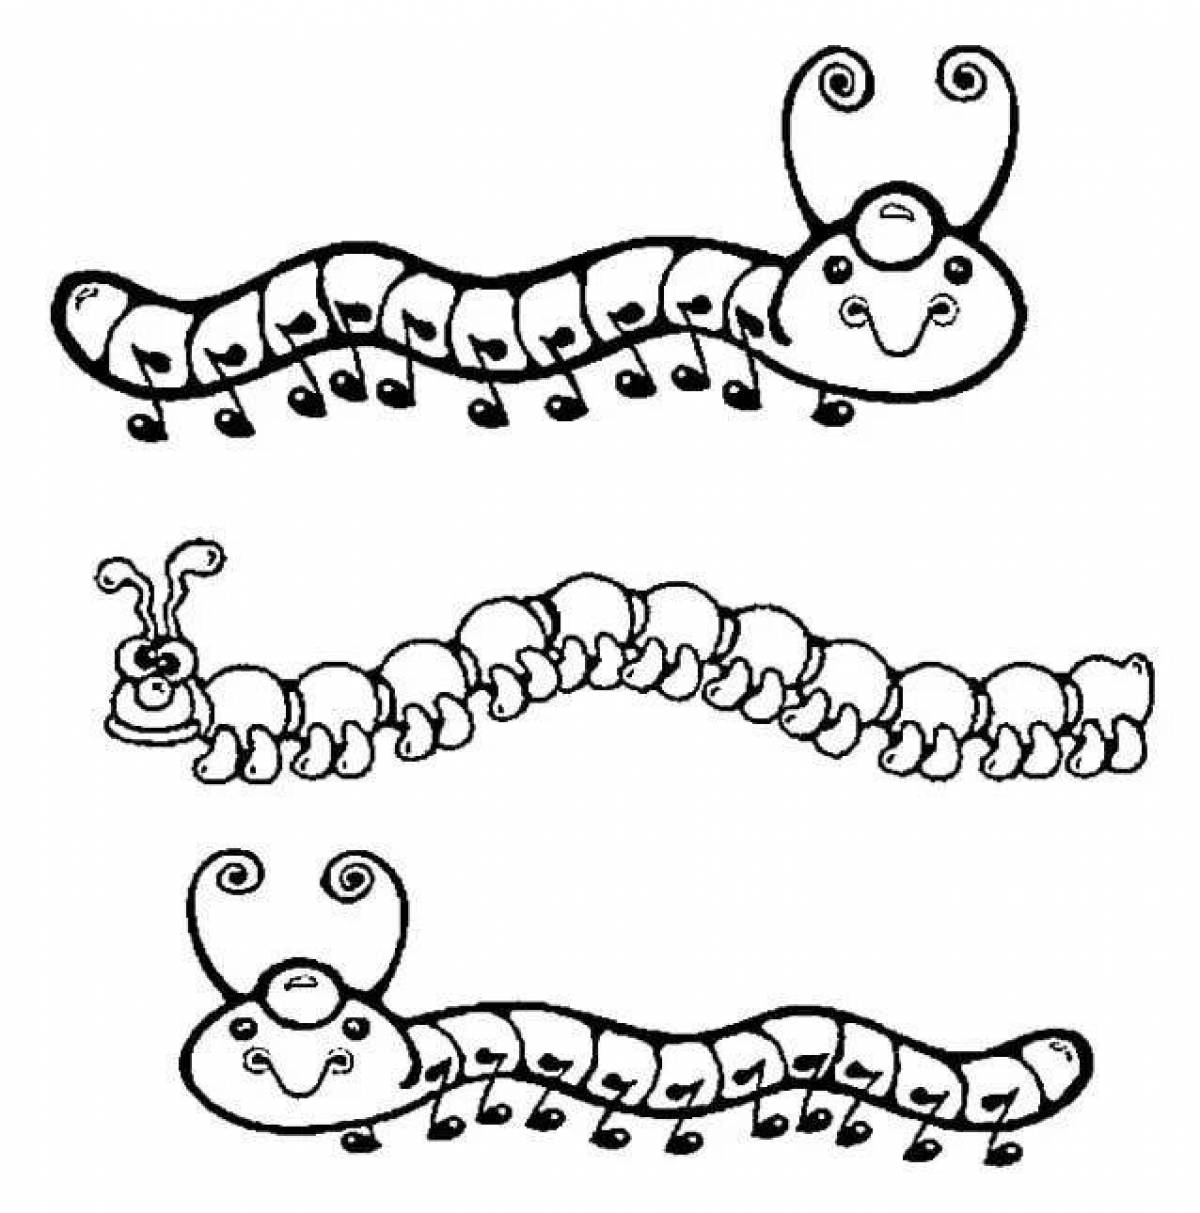 Centipede fun coloring page